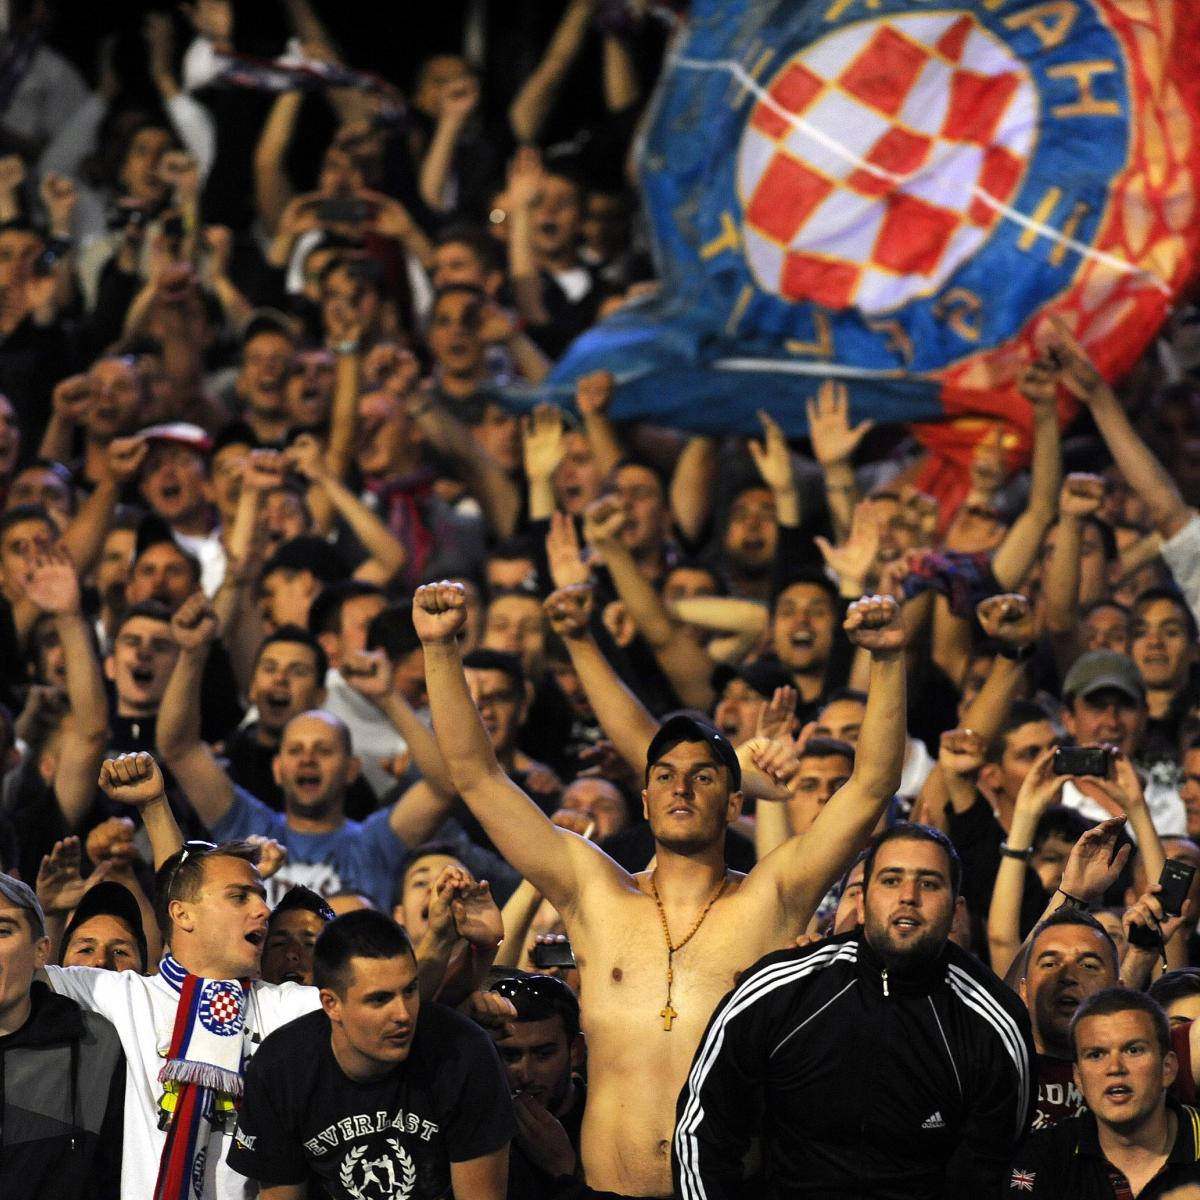 JERSEY Hajduk Split HNK Away 2023